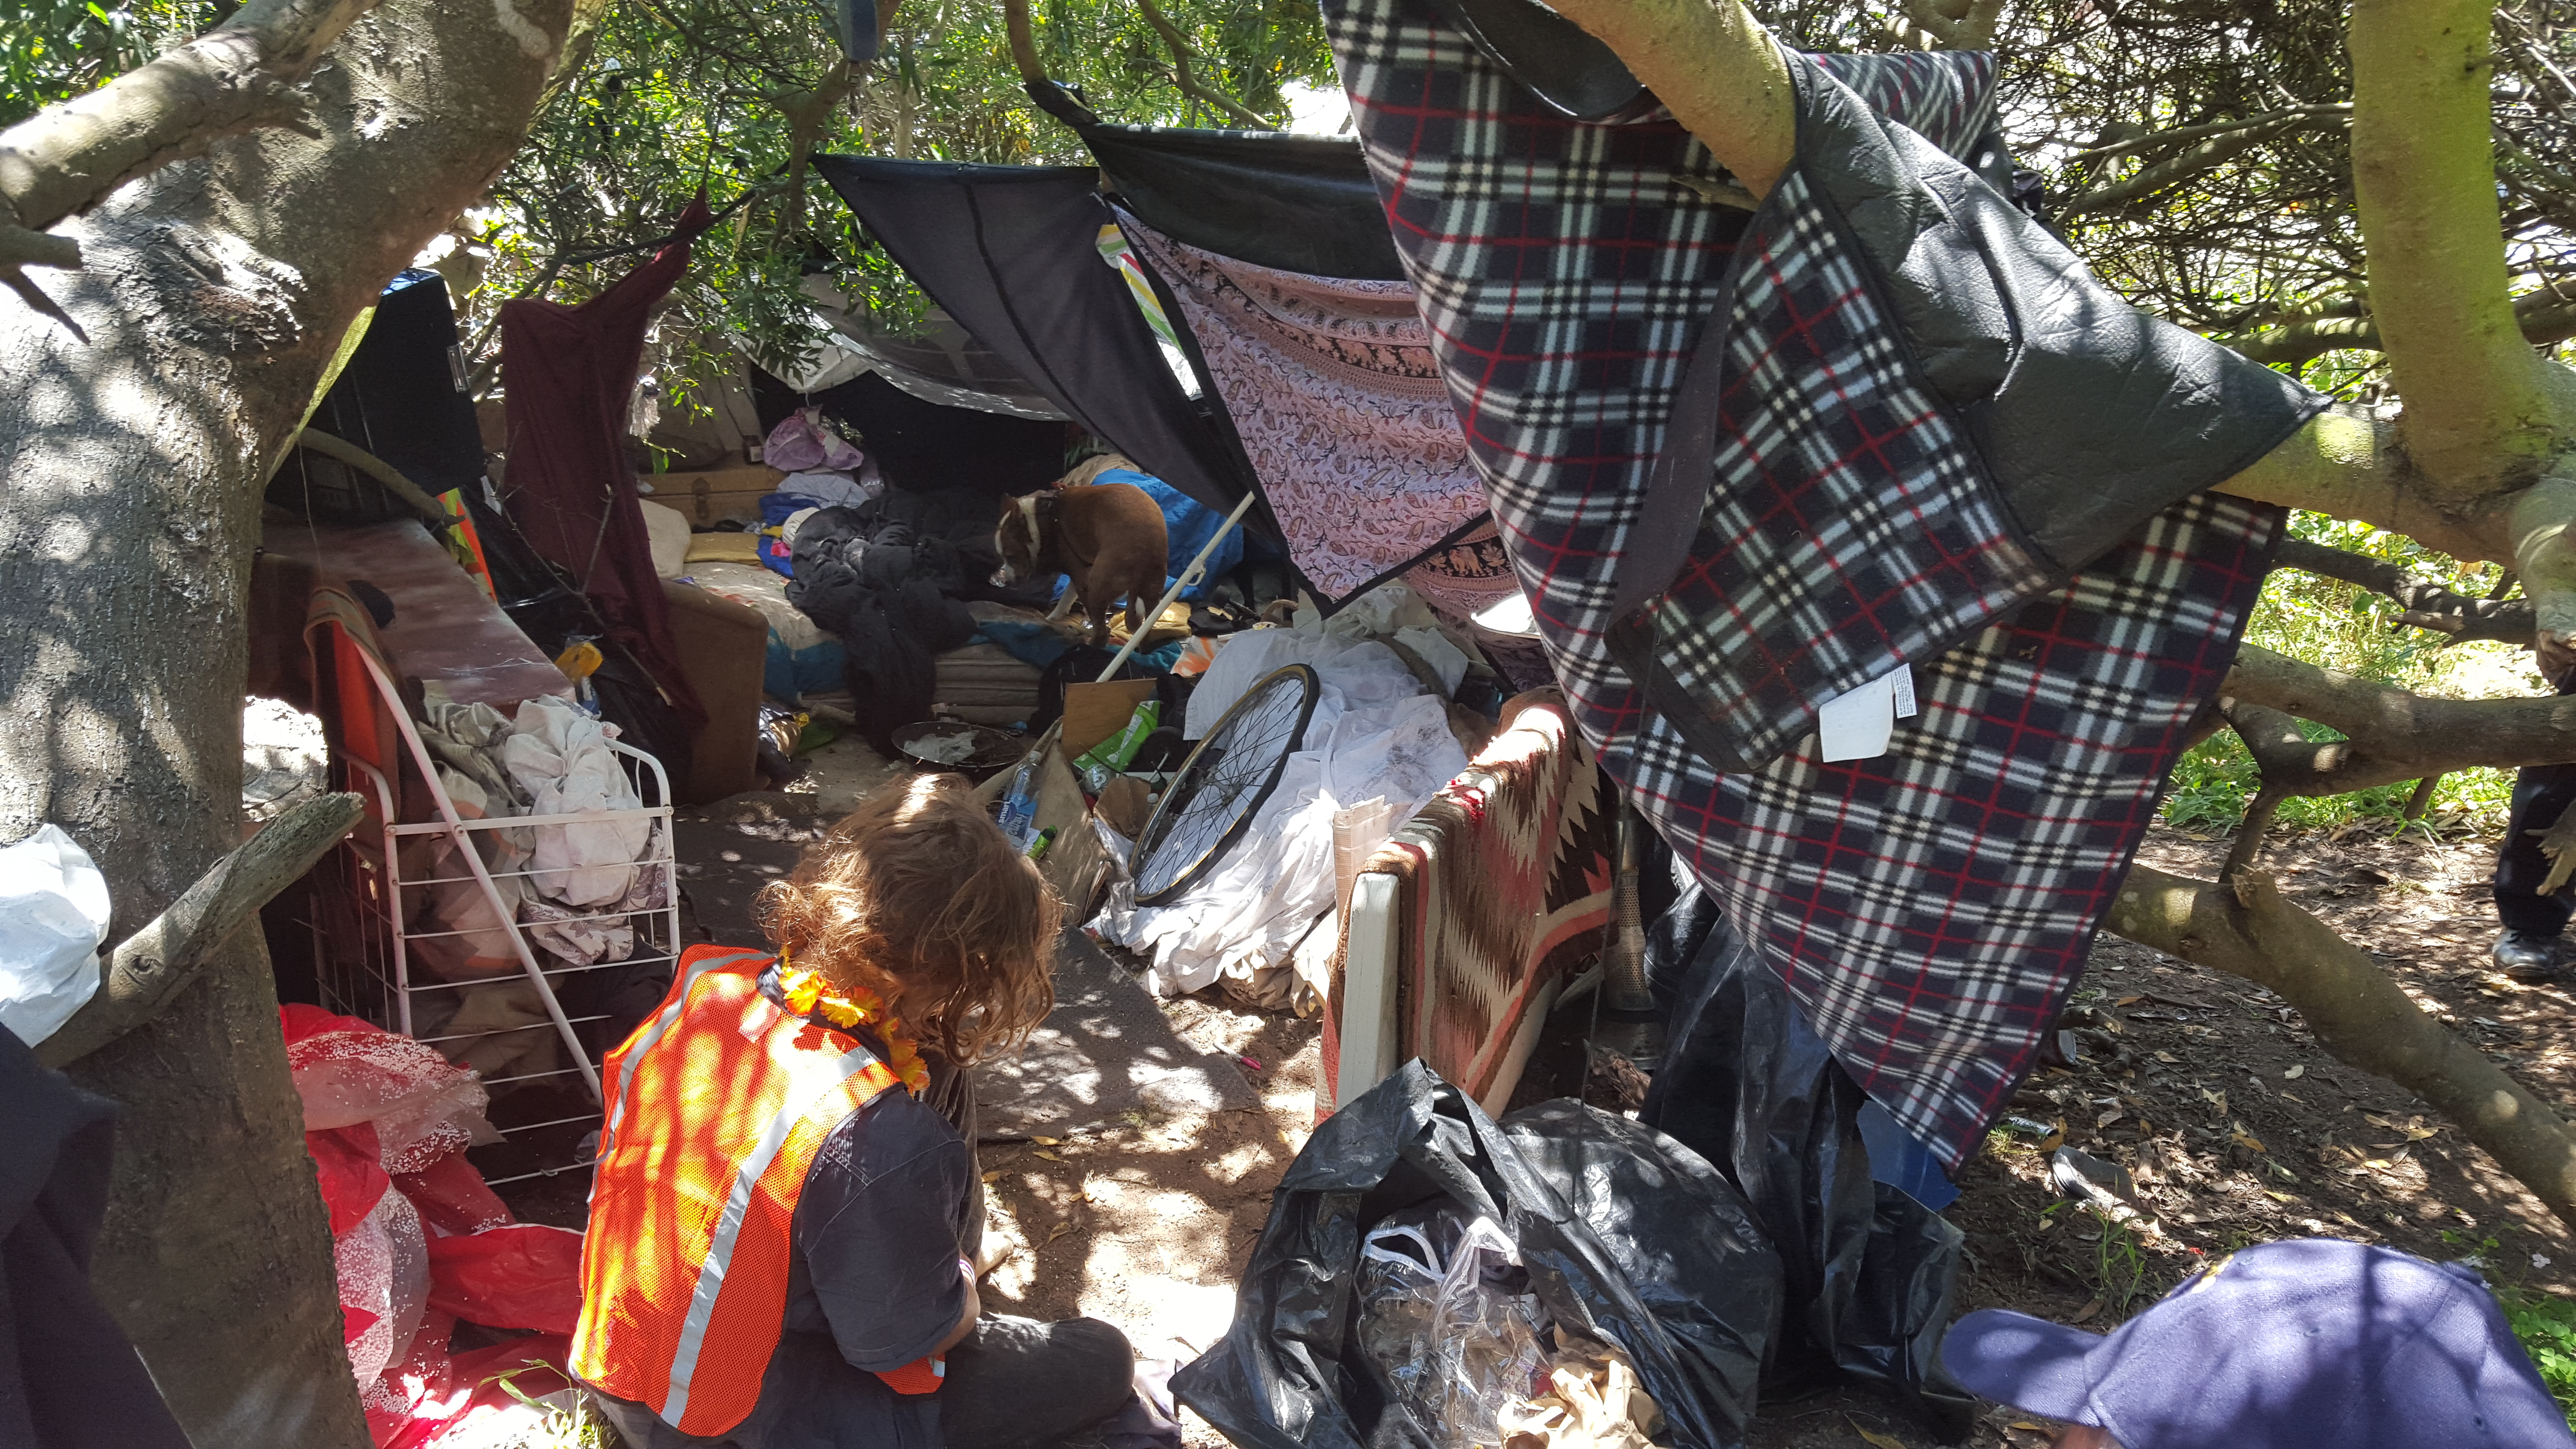 A homeless encampment in Sutro Park